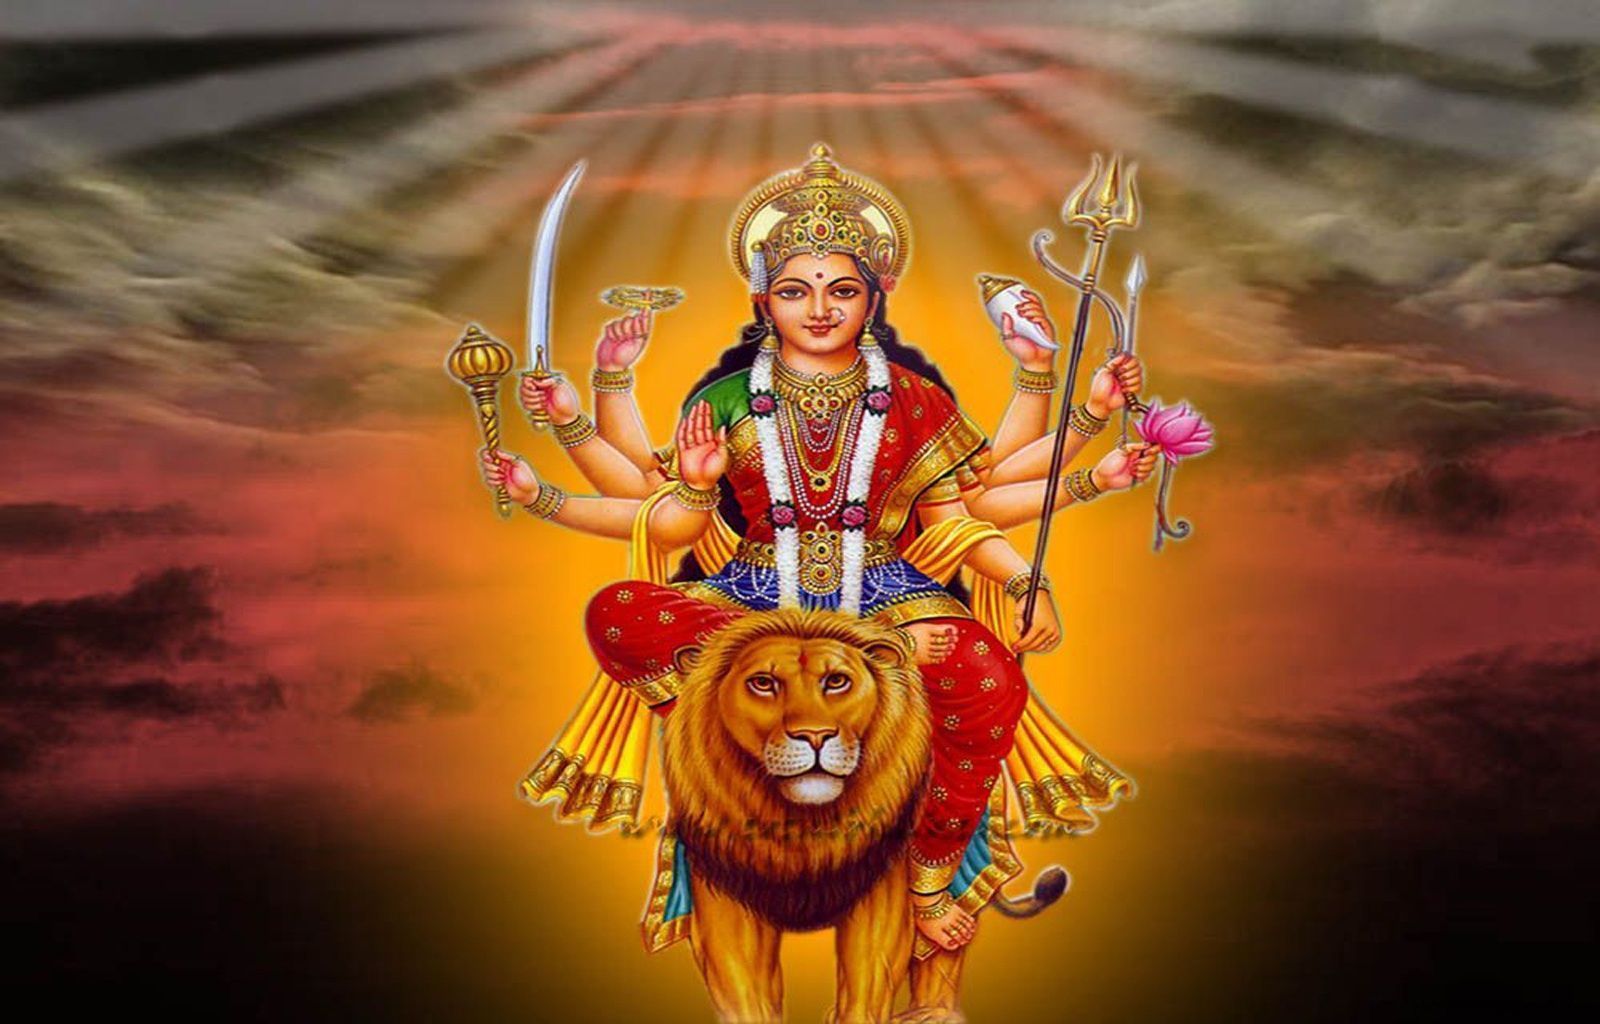 1080p HD Maa Durga wallpaper image Picture. Durga Maa Background